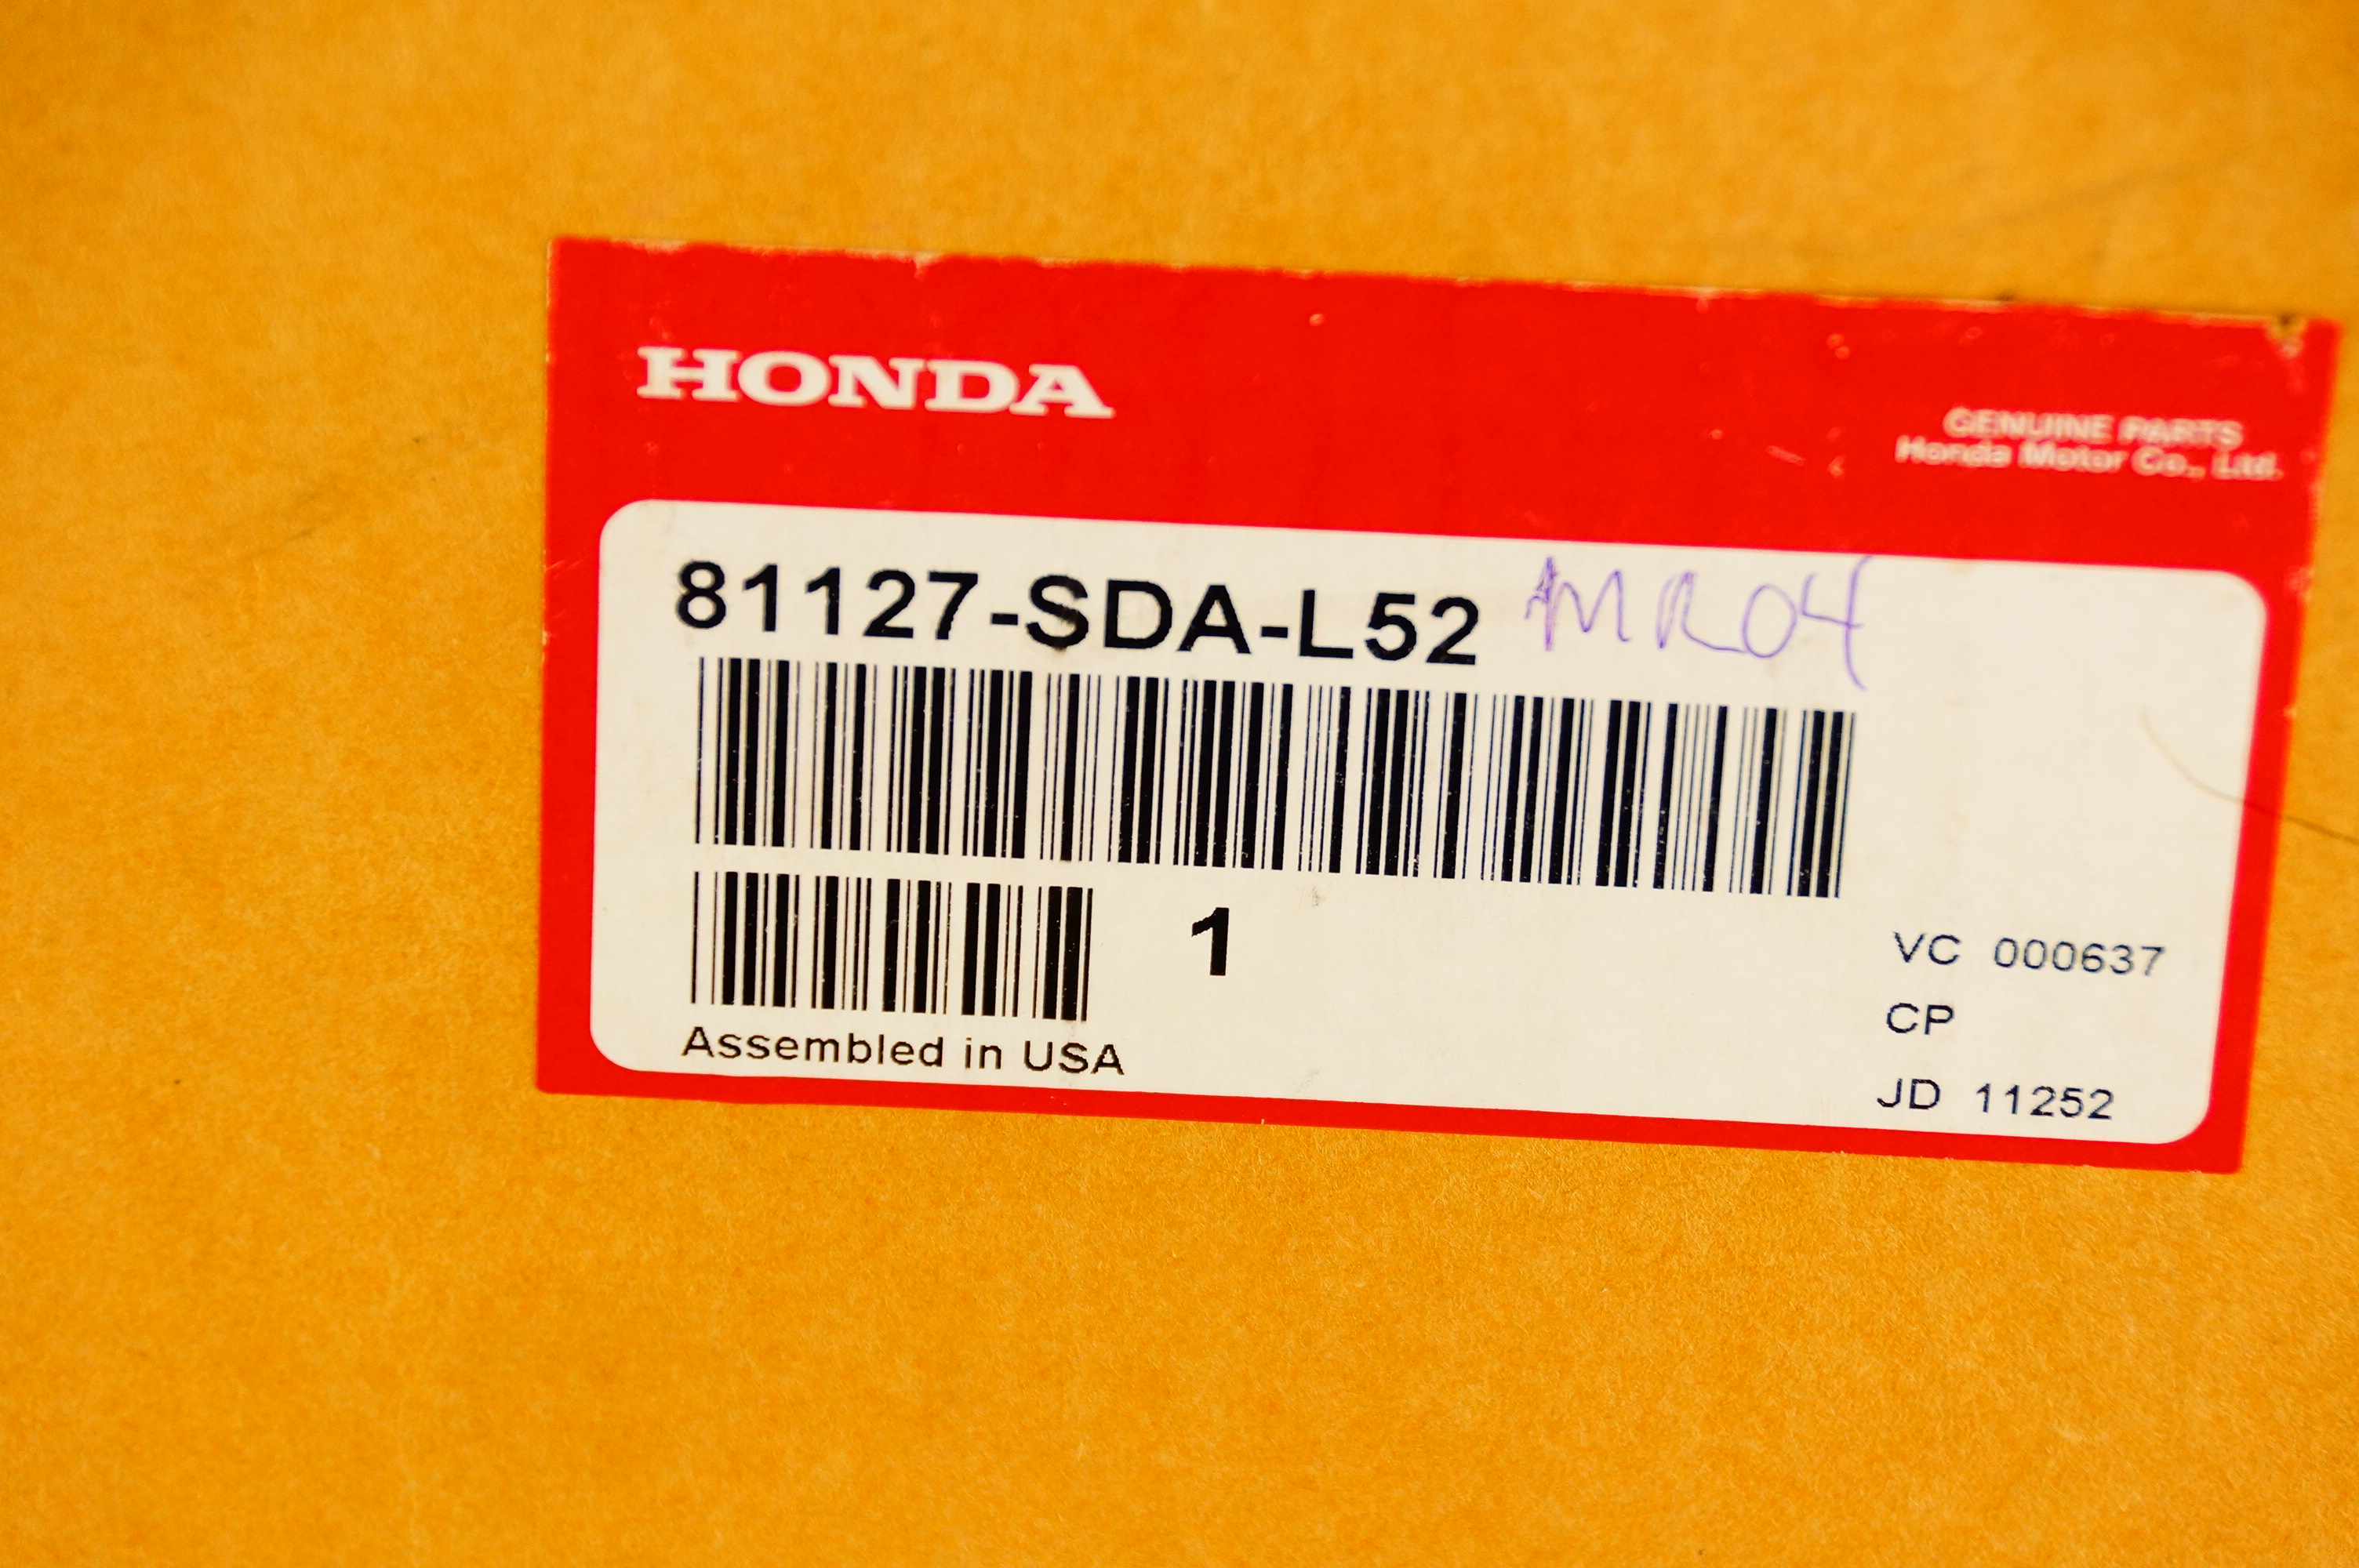 Genuine OEM 81127-SDA-L52 Honda R FR Seat Back with OPDS Sensor 07 Accord - image 6